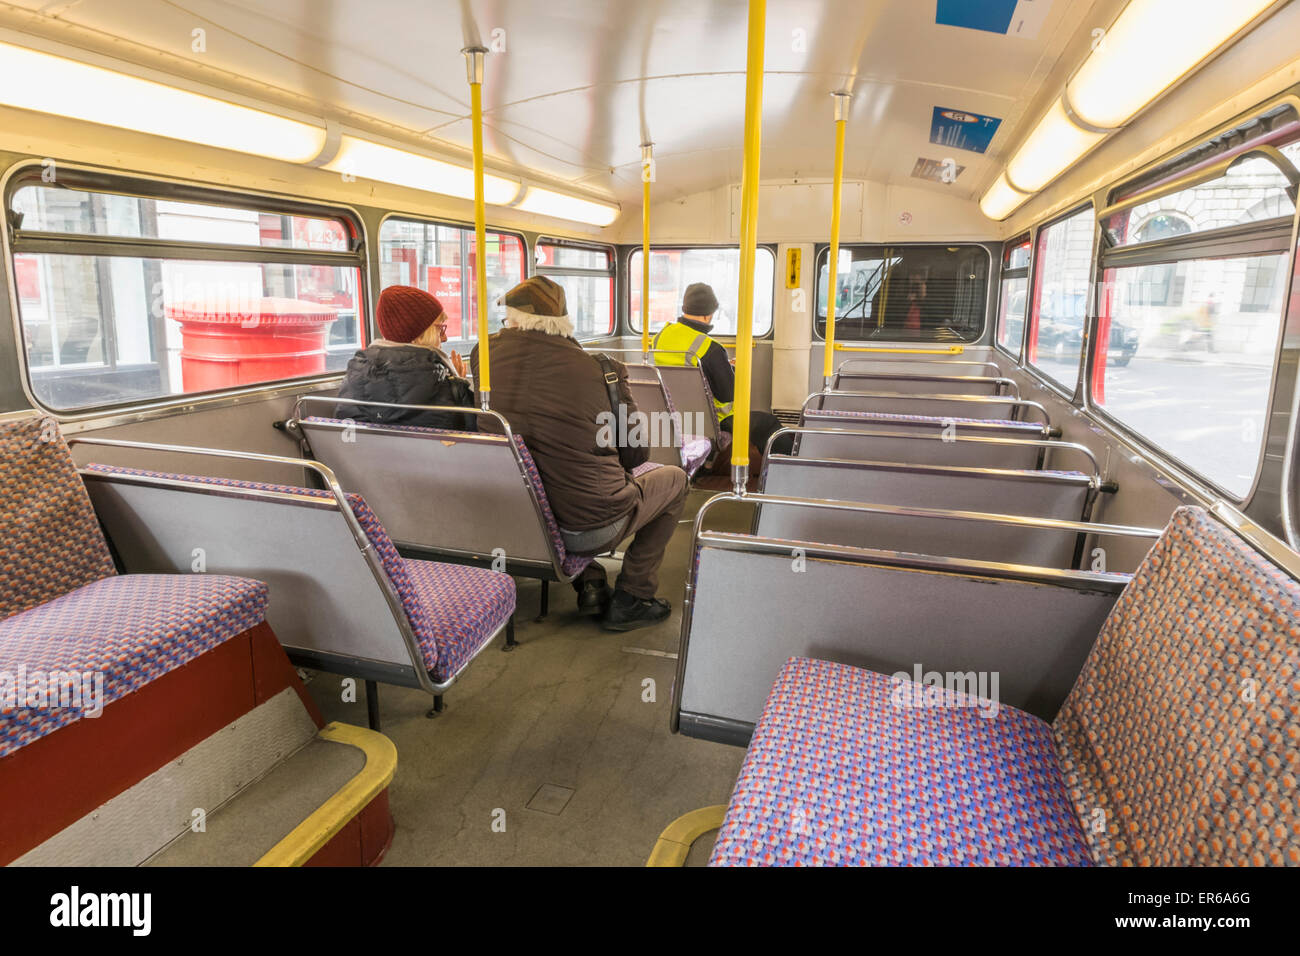 england-london-interior-of-routemaster-double-decker-bus-ER6A6G.jpg